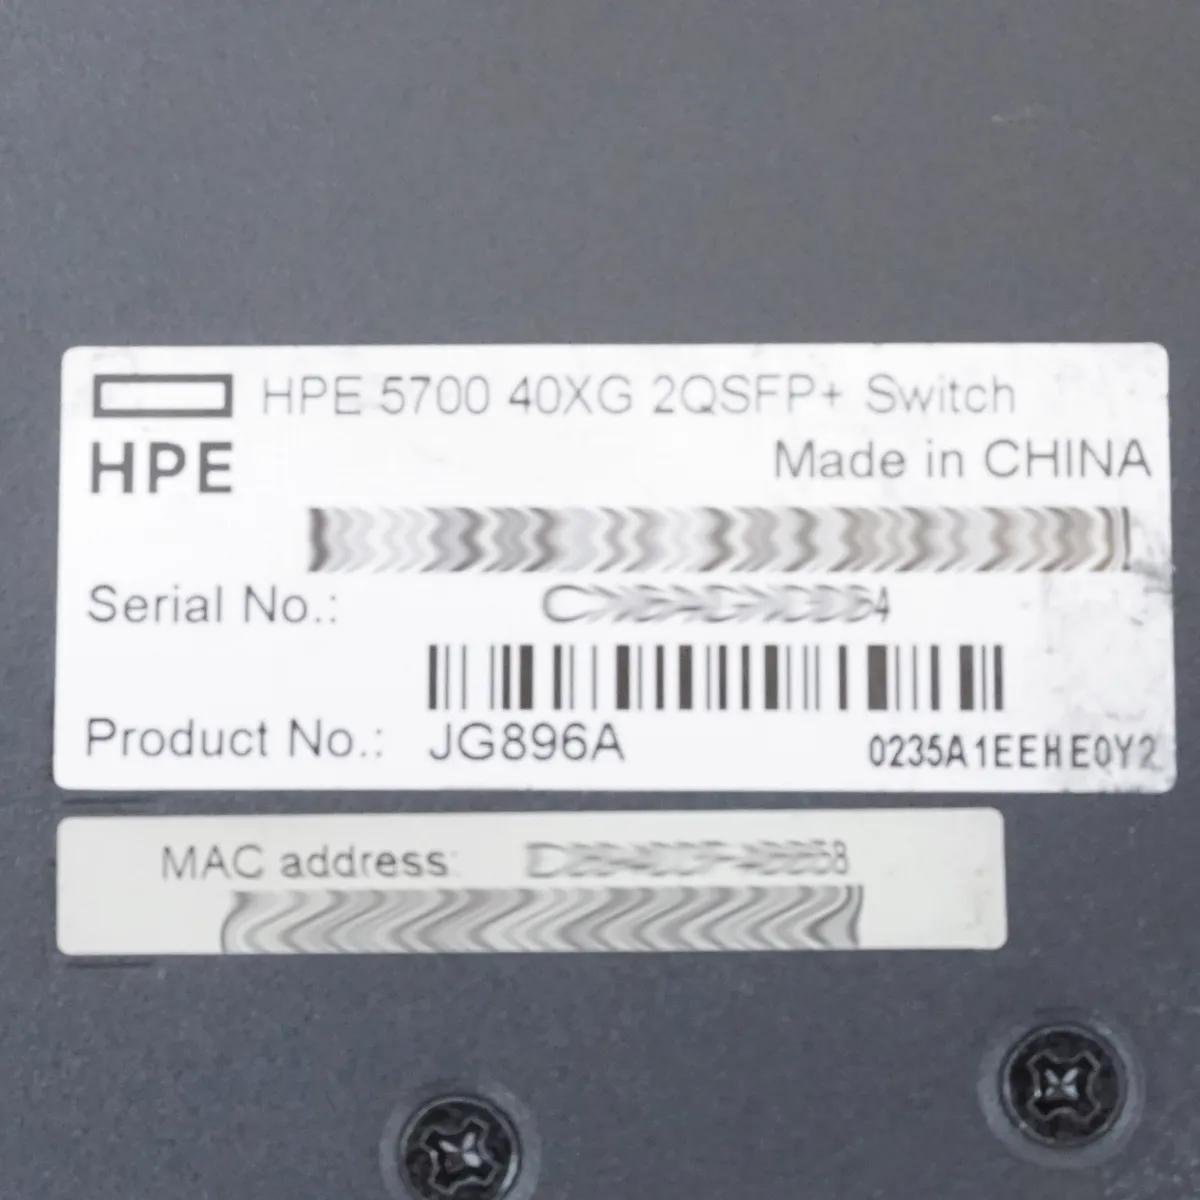 HP FlexFabric 5700 (JG896A) 40-SFP+ 10Gbps, 2-QSFP+ 40Gbps Switch